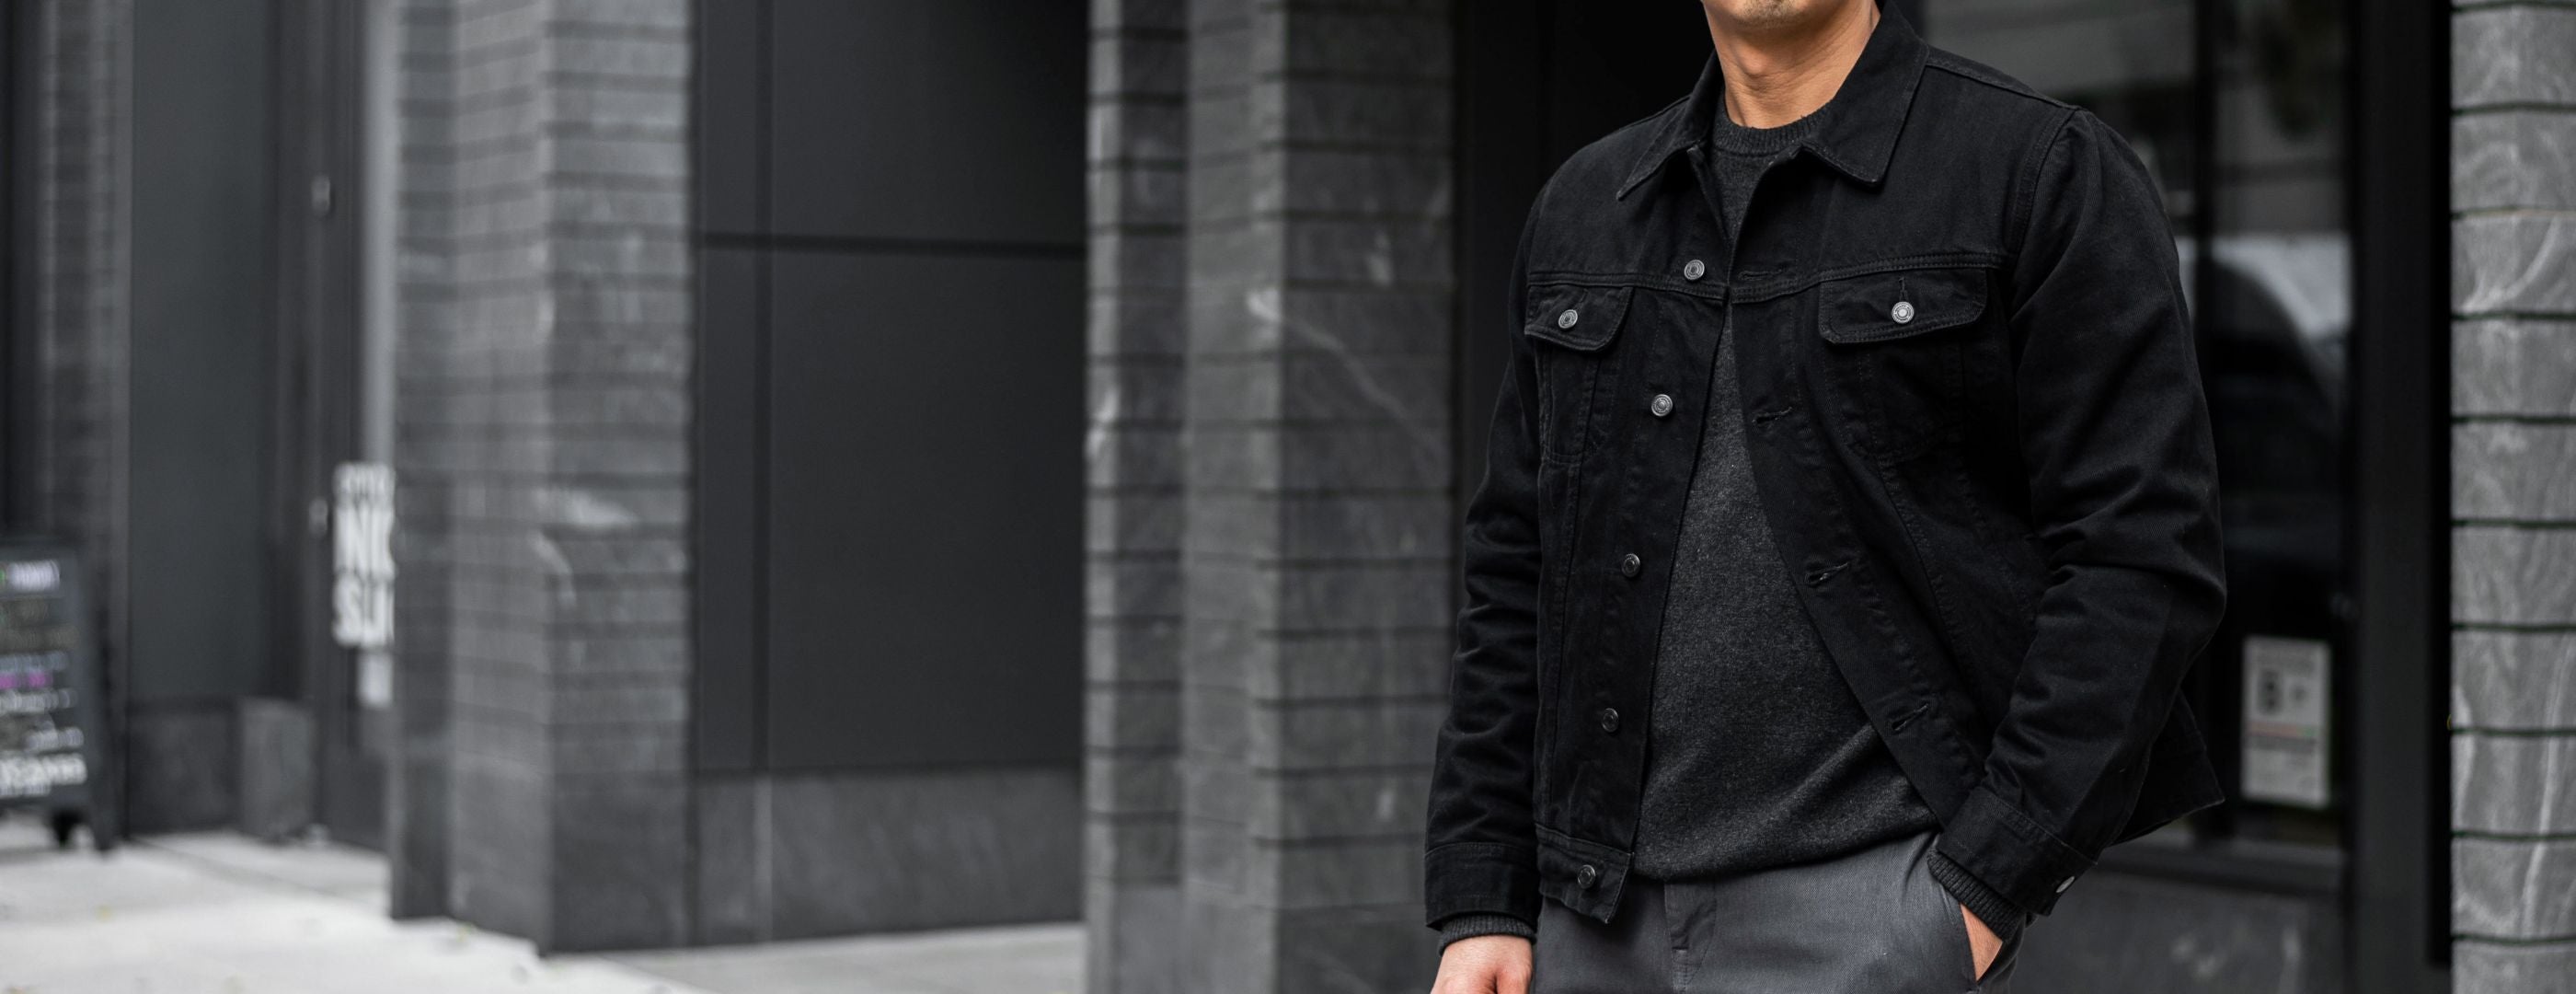 8 Men Outfit Ideas For That Date With Her - Society19 | Black denim jacket, Black  denim jacket men, Jean jacket outfits men